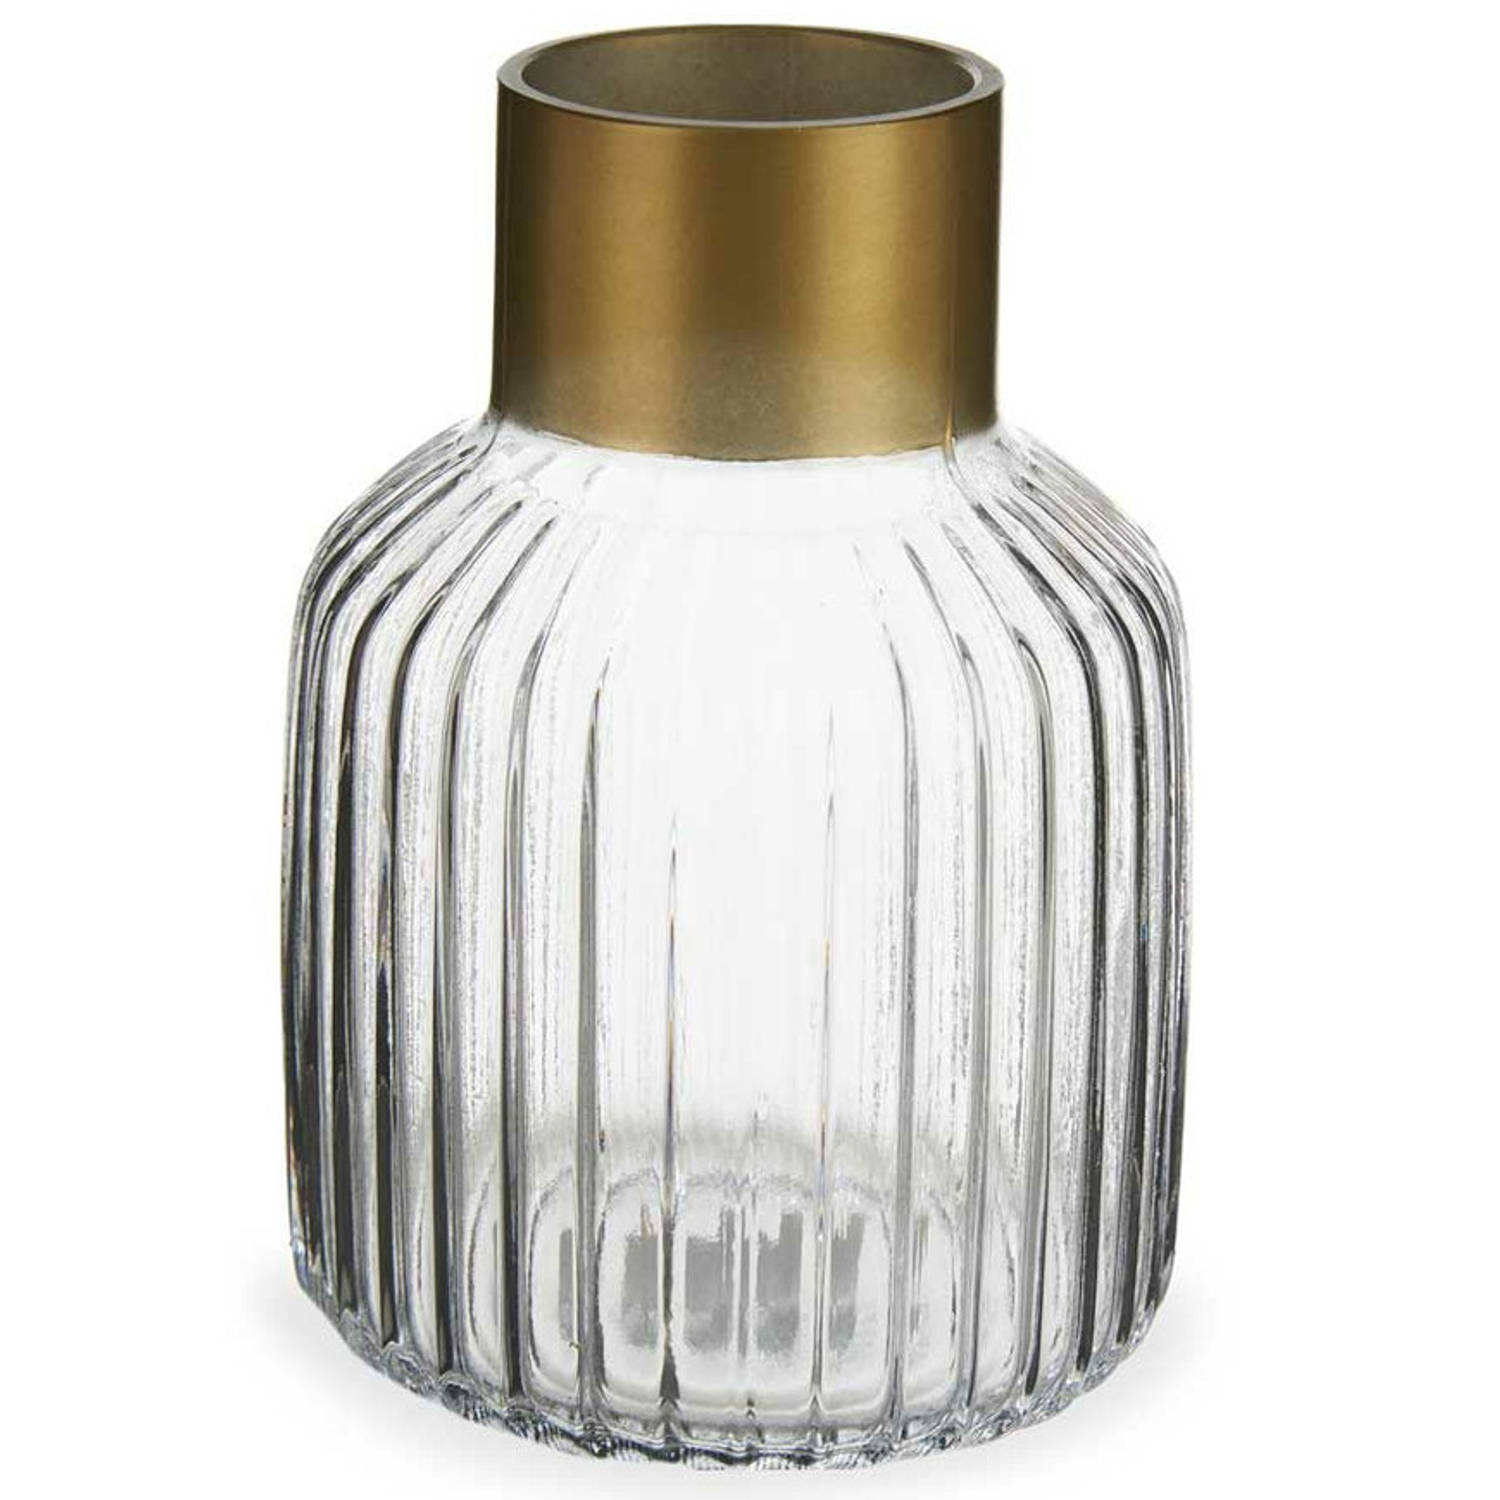 Bloemenvaas luxe decoratie glas transparant-goud 12 x 18 cm Vazen